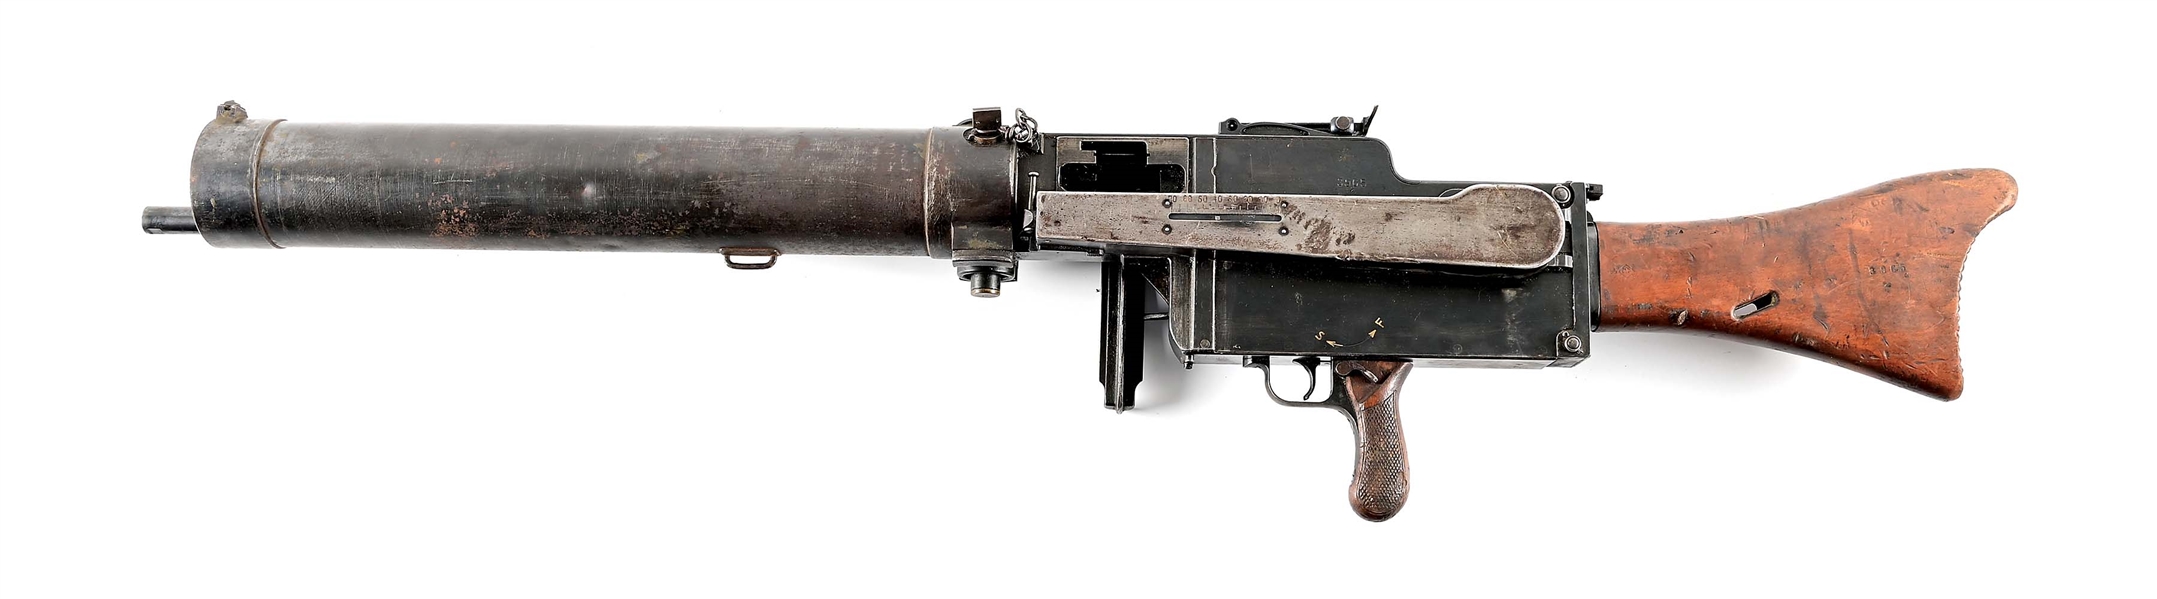 WWI SPANDAU MG 08/15 DISPLAY MACHINE GUN.